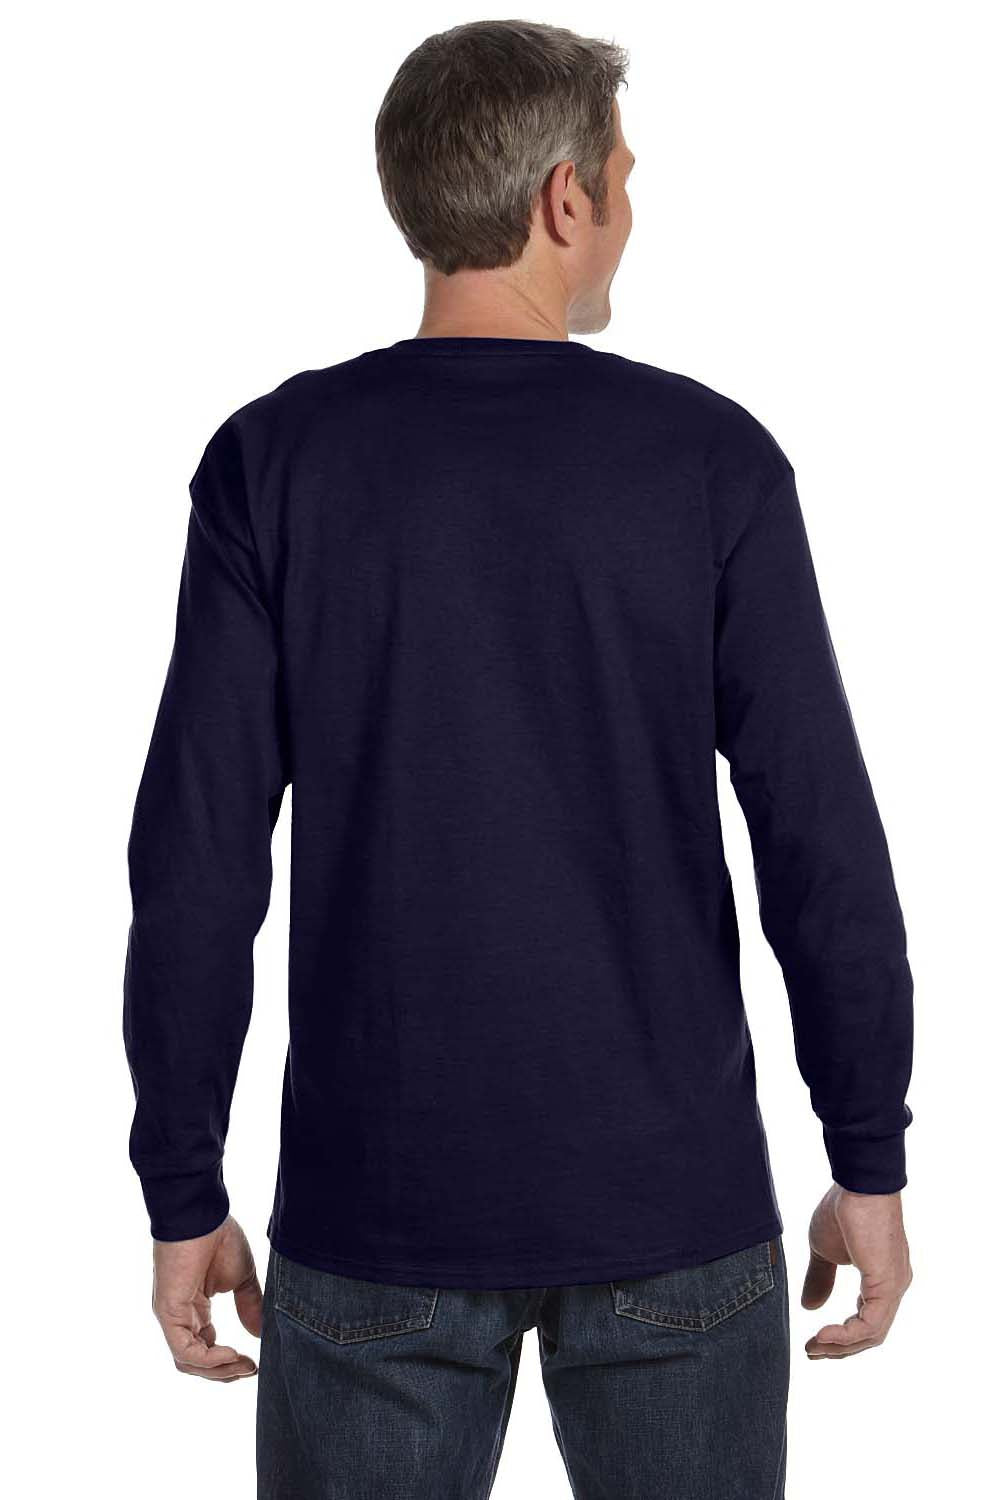 Jerzees 29L Mens Dri-Power Moisture Wicking Long Sleeve Crewneck T-Shirt Navy Blue Back